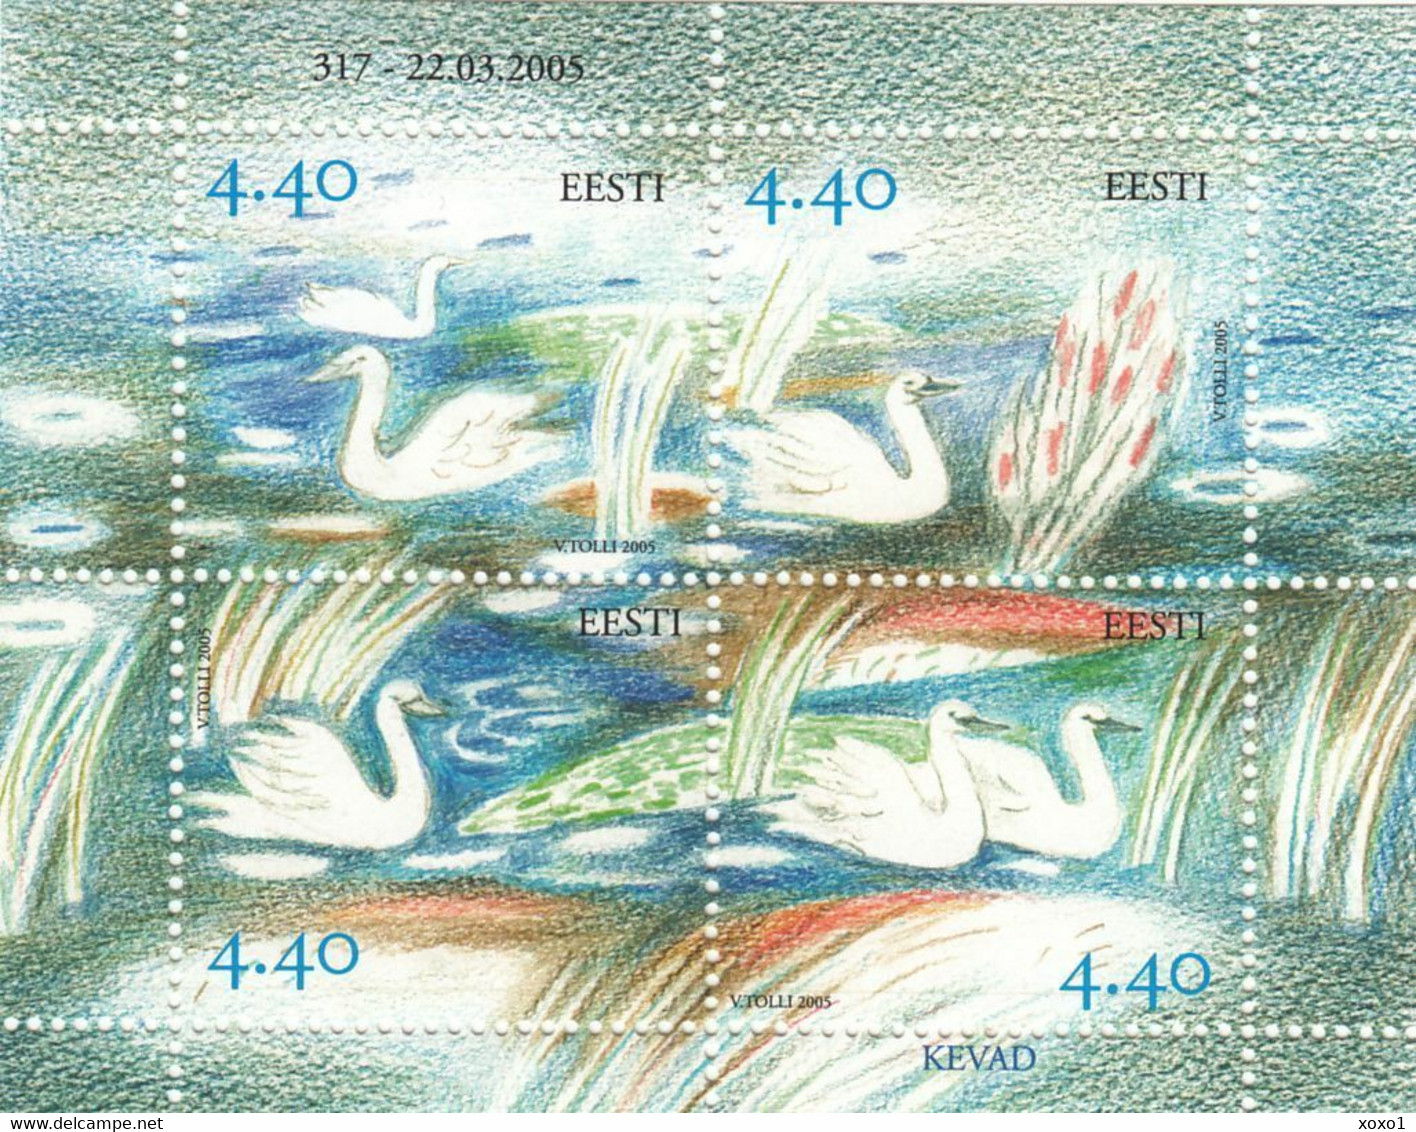 Estonia 2005 MiNr. 509 - 512(Block 22) Estland Birds Mute Swans Seasons Spring 1 S/sh MNH** 2.80 € - Schwäne